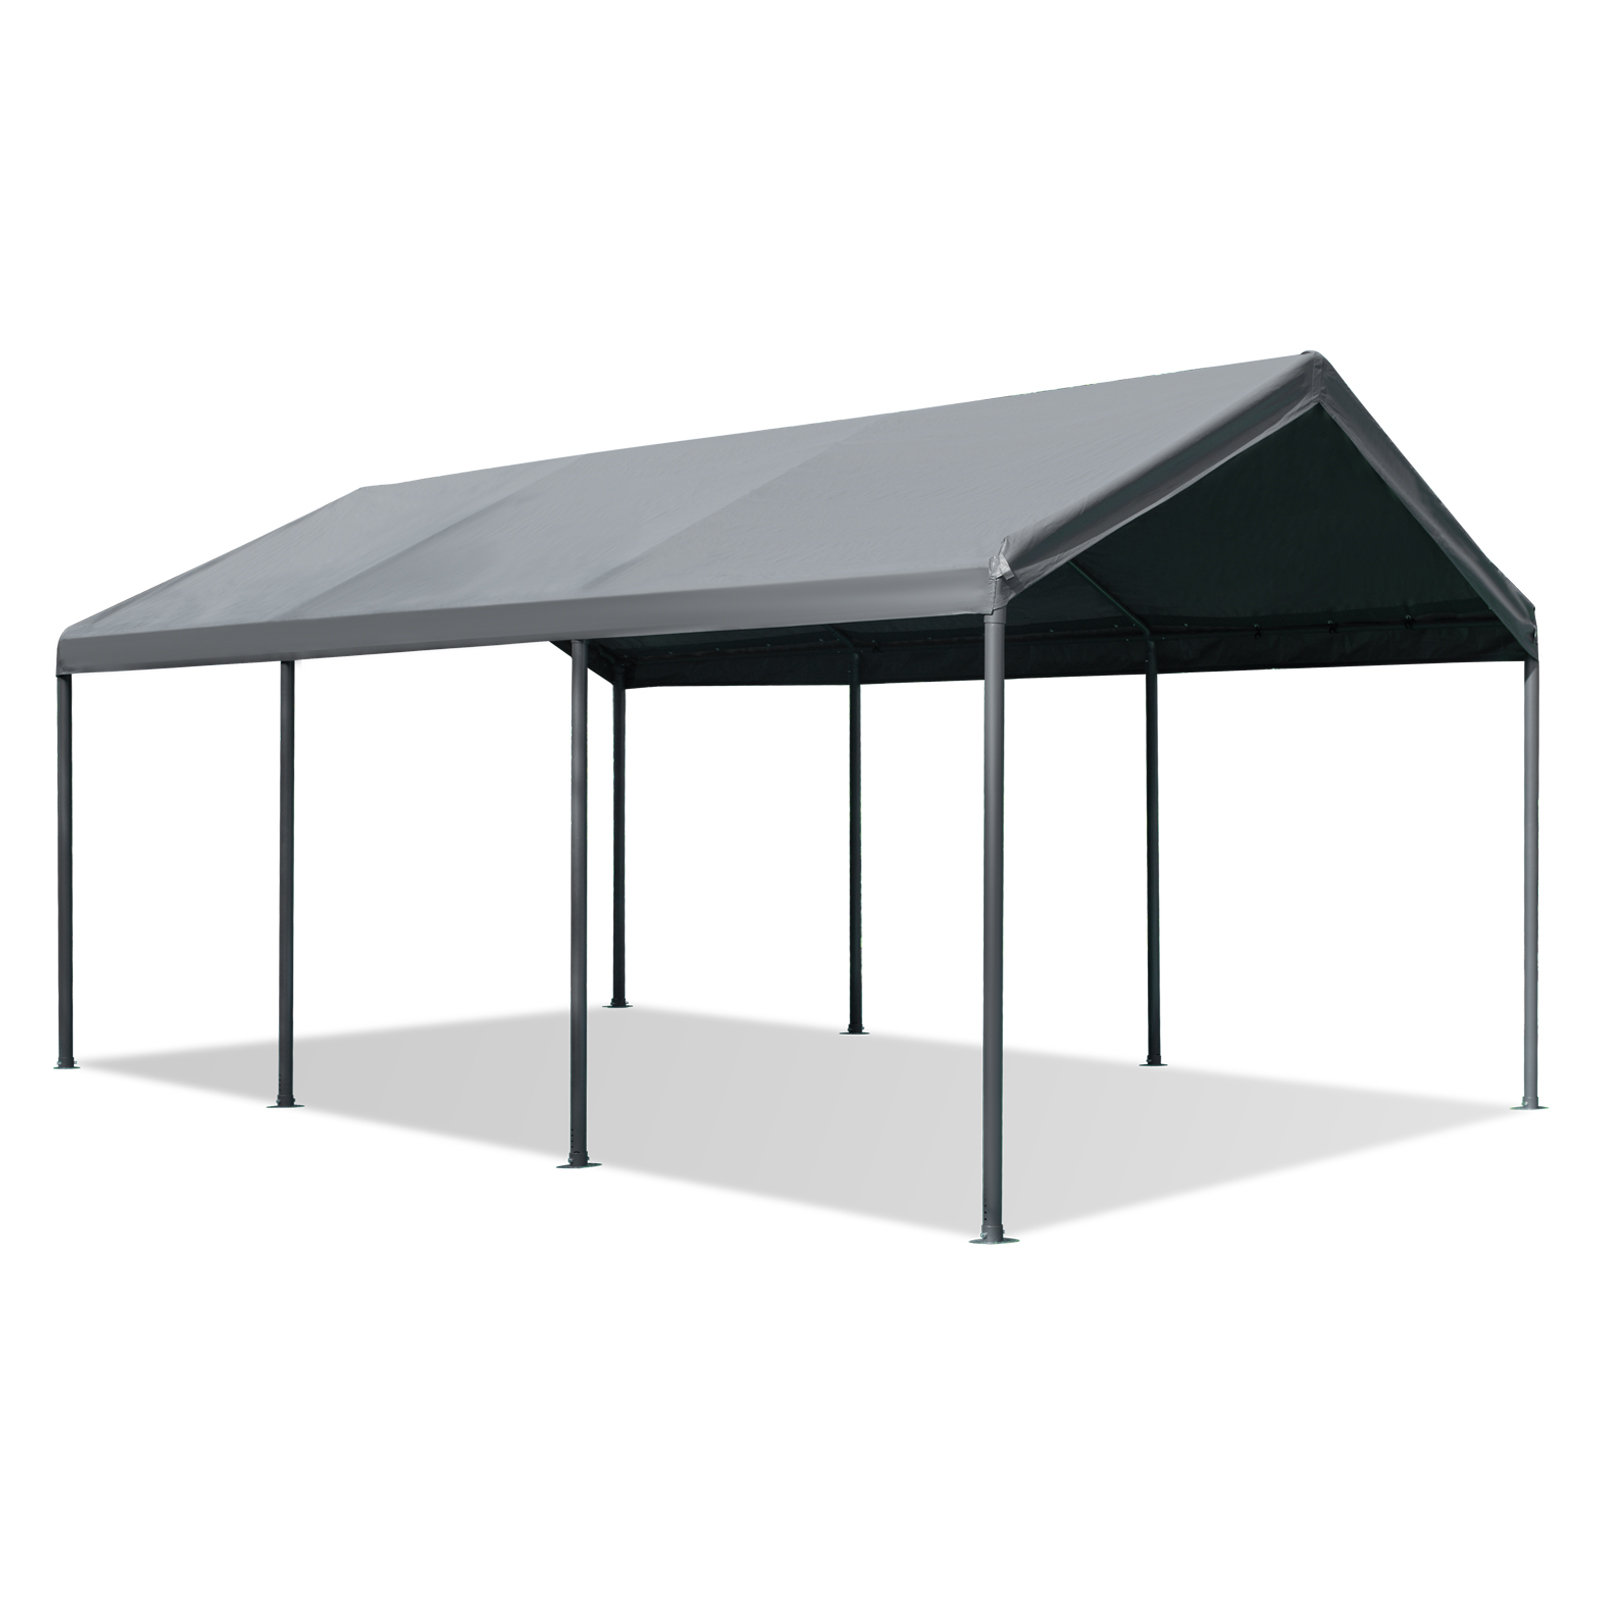 Gardesol Carport,10X20ft Heavy Duty Car Canopy Portable Garage for Party  Tent, Wedding, Garden & Reviews